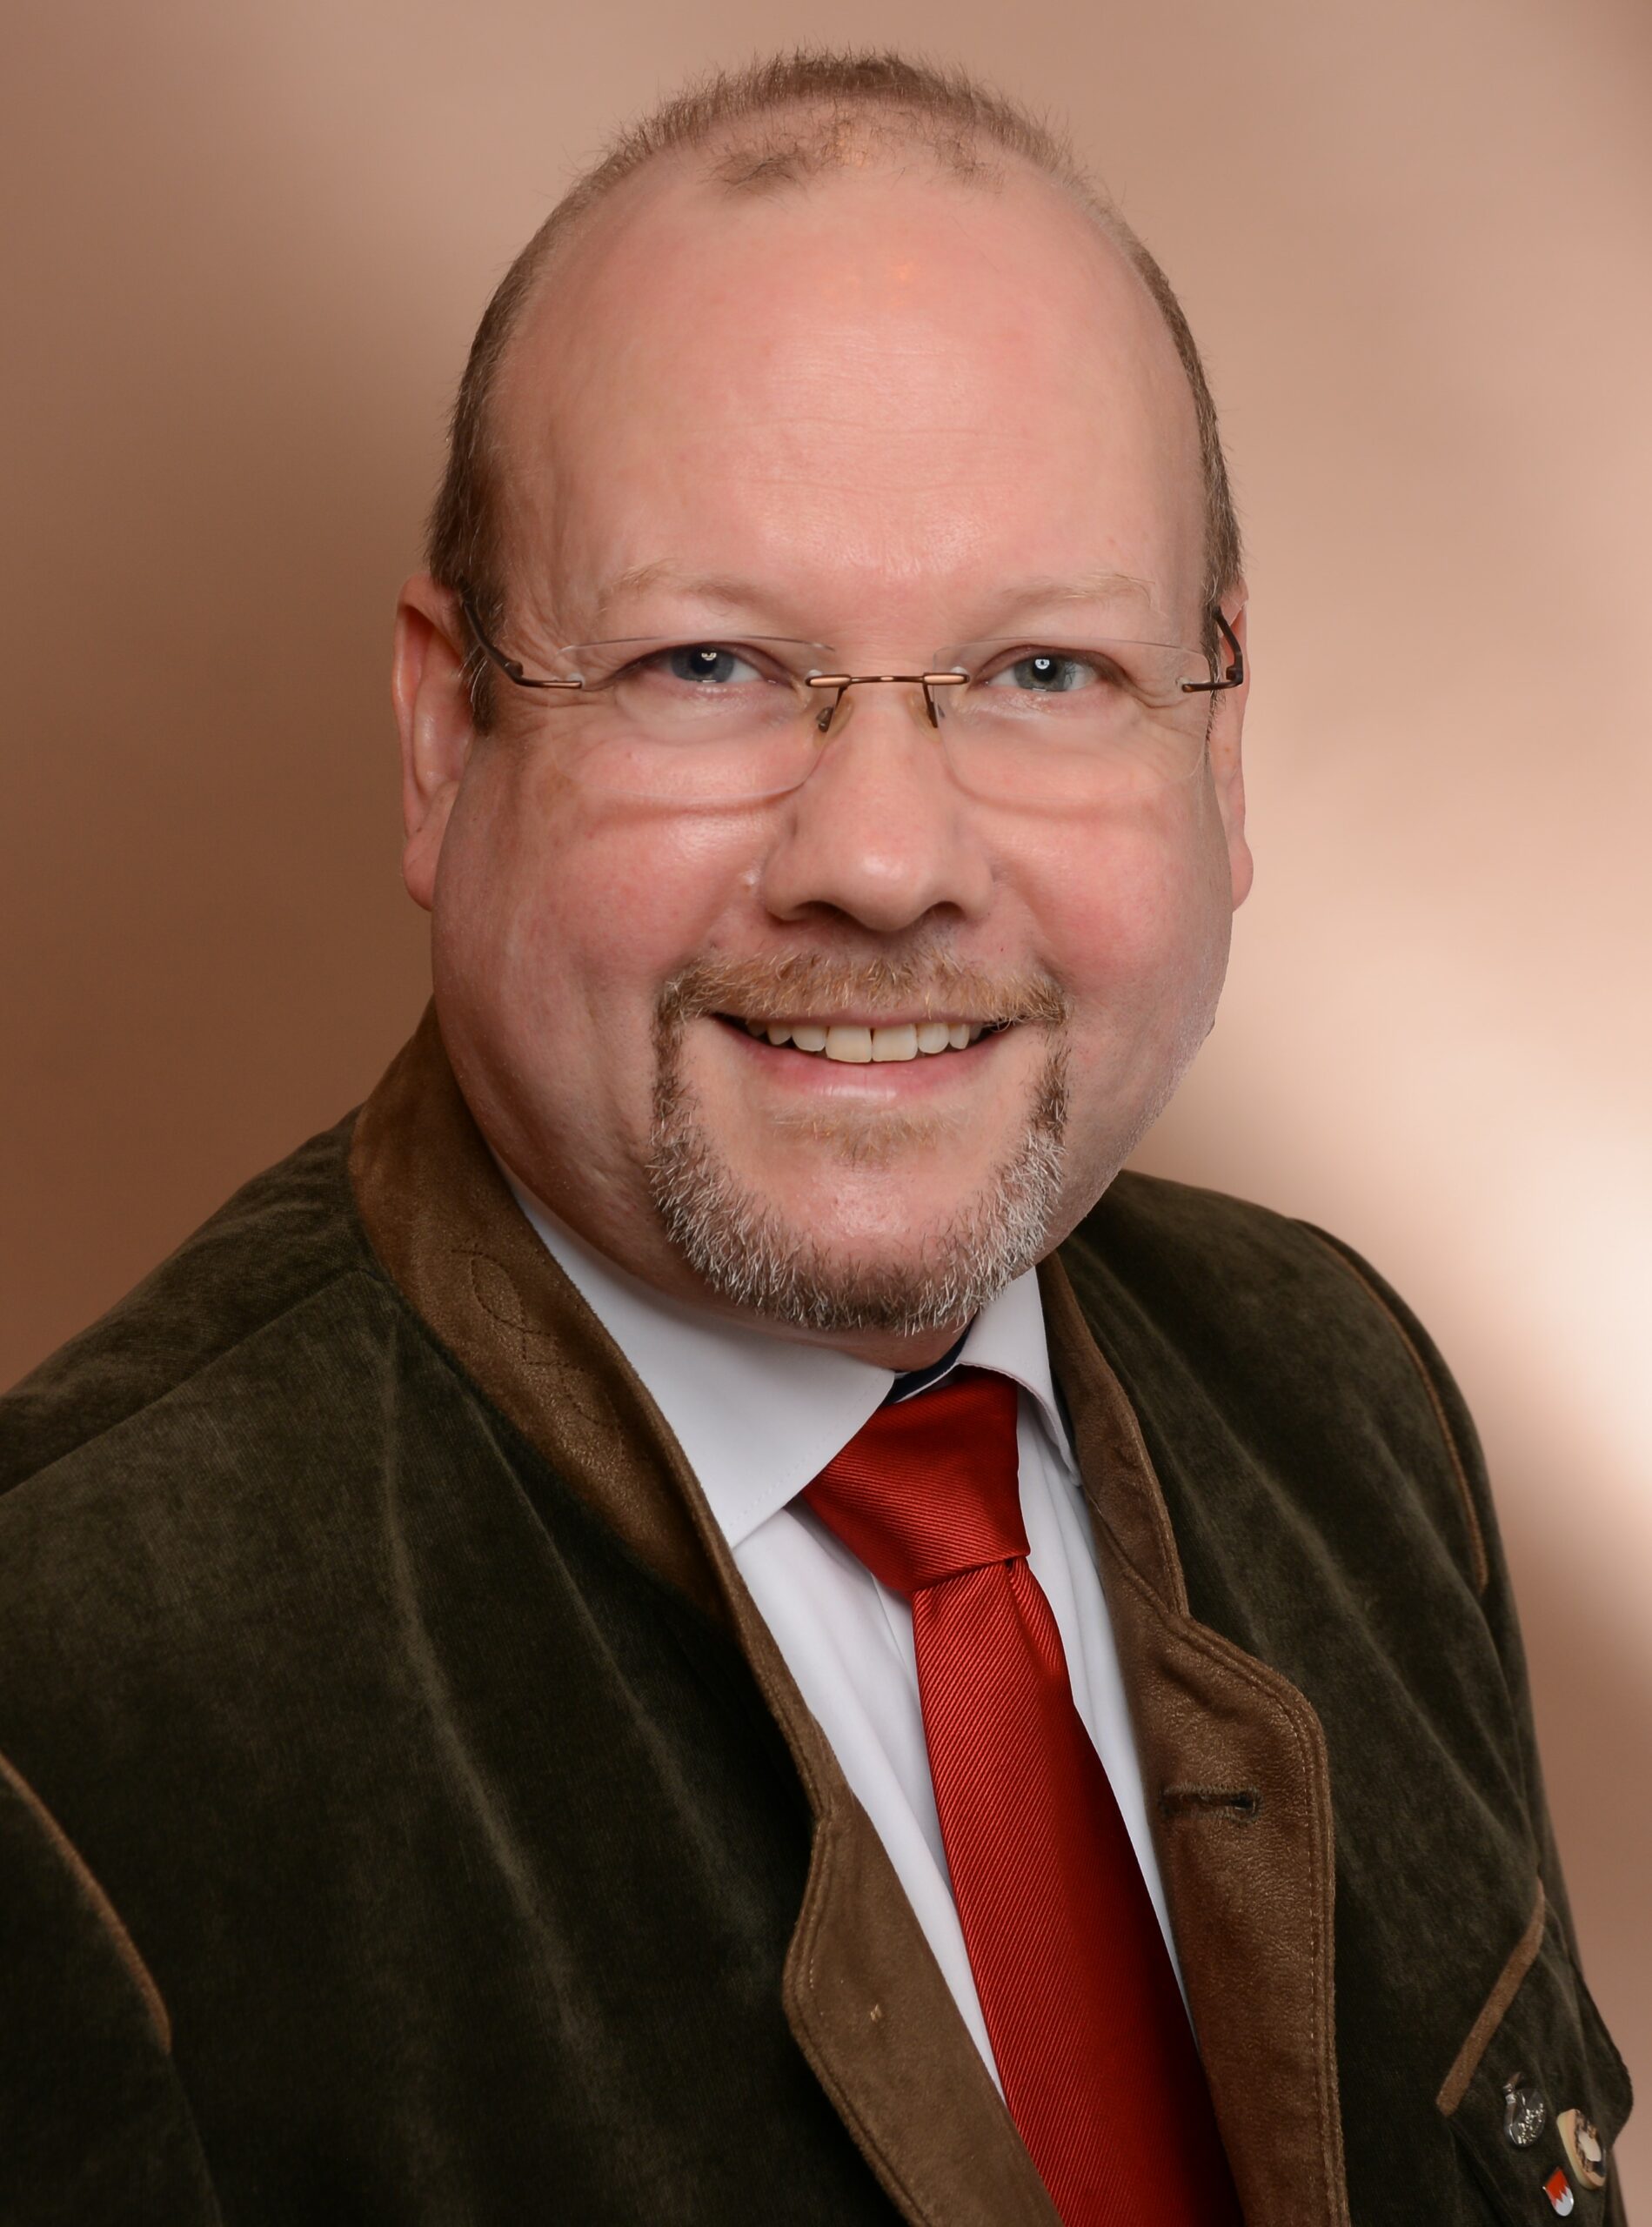 Manfred Hauner, Senior Sales Manager